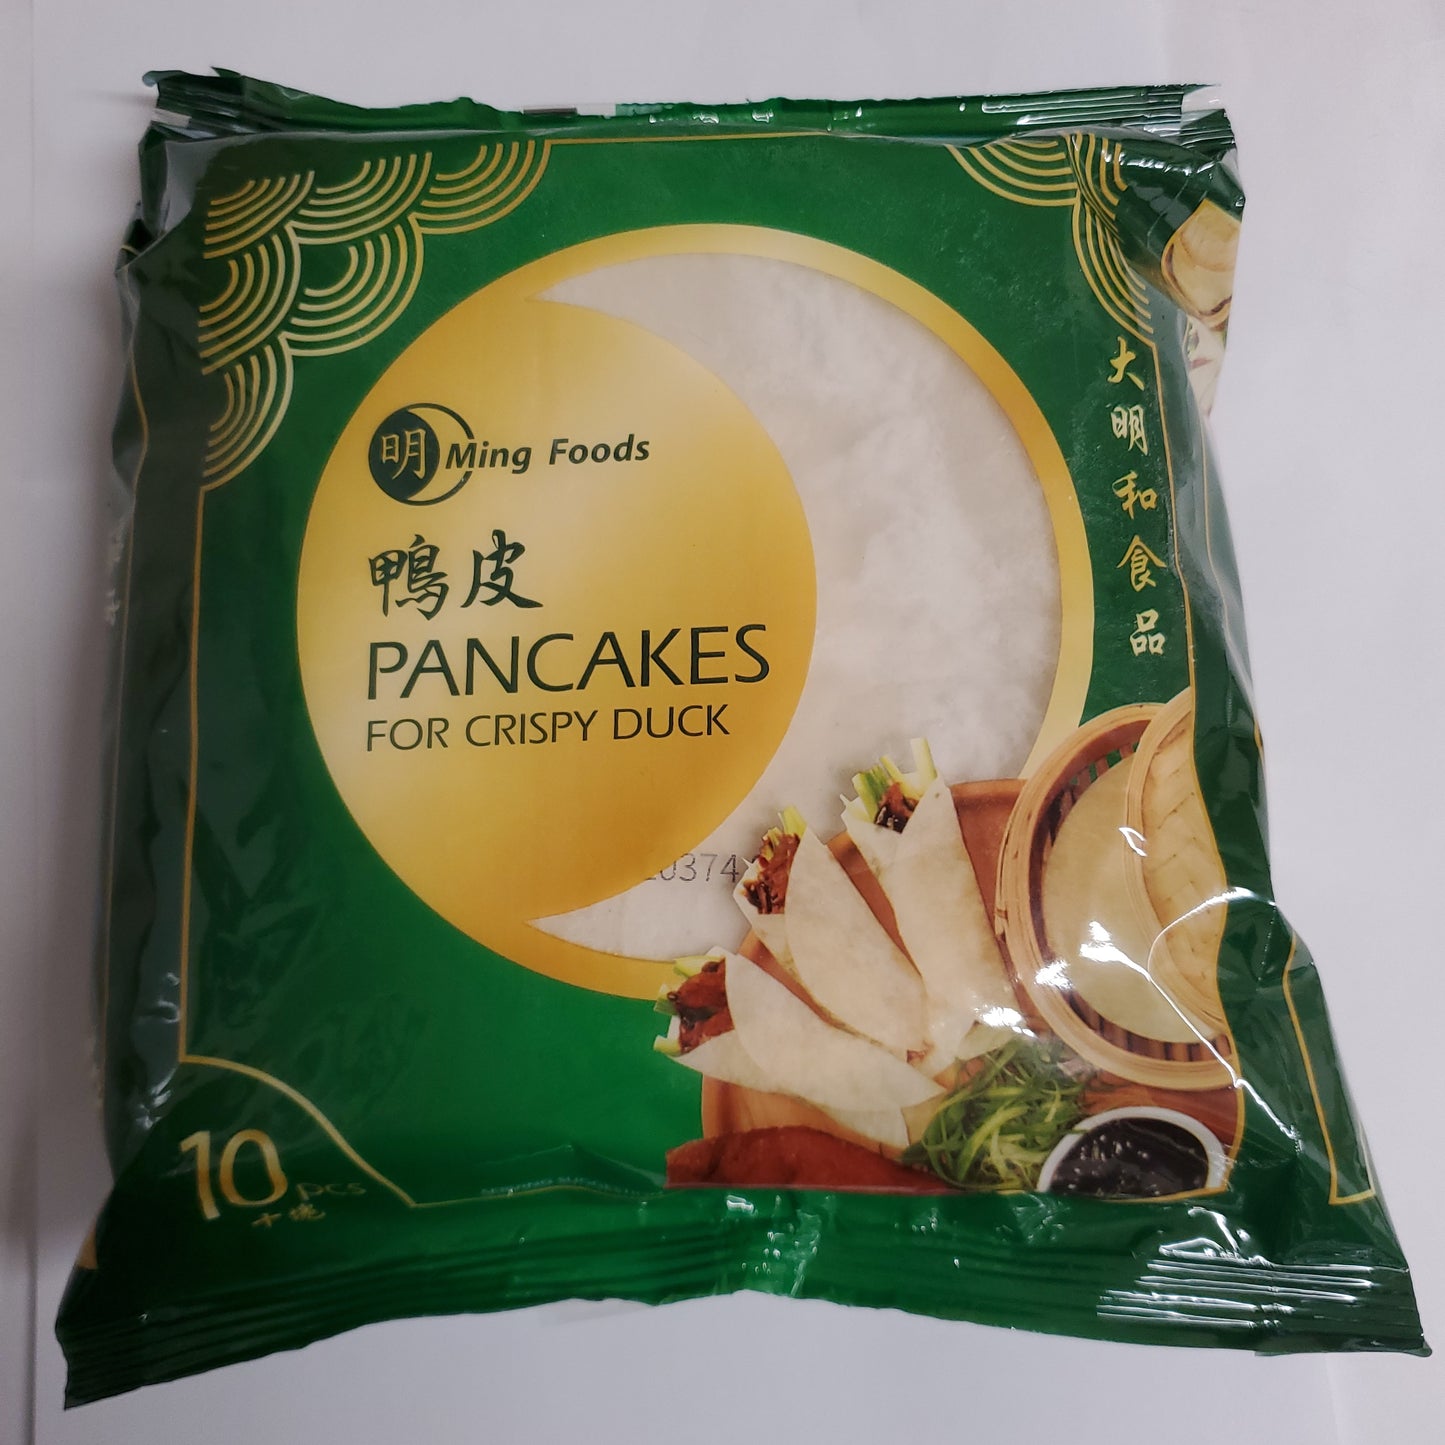 Ming Foods Pancakes for Crispy Duck 10pcs (100g)